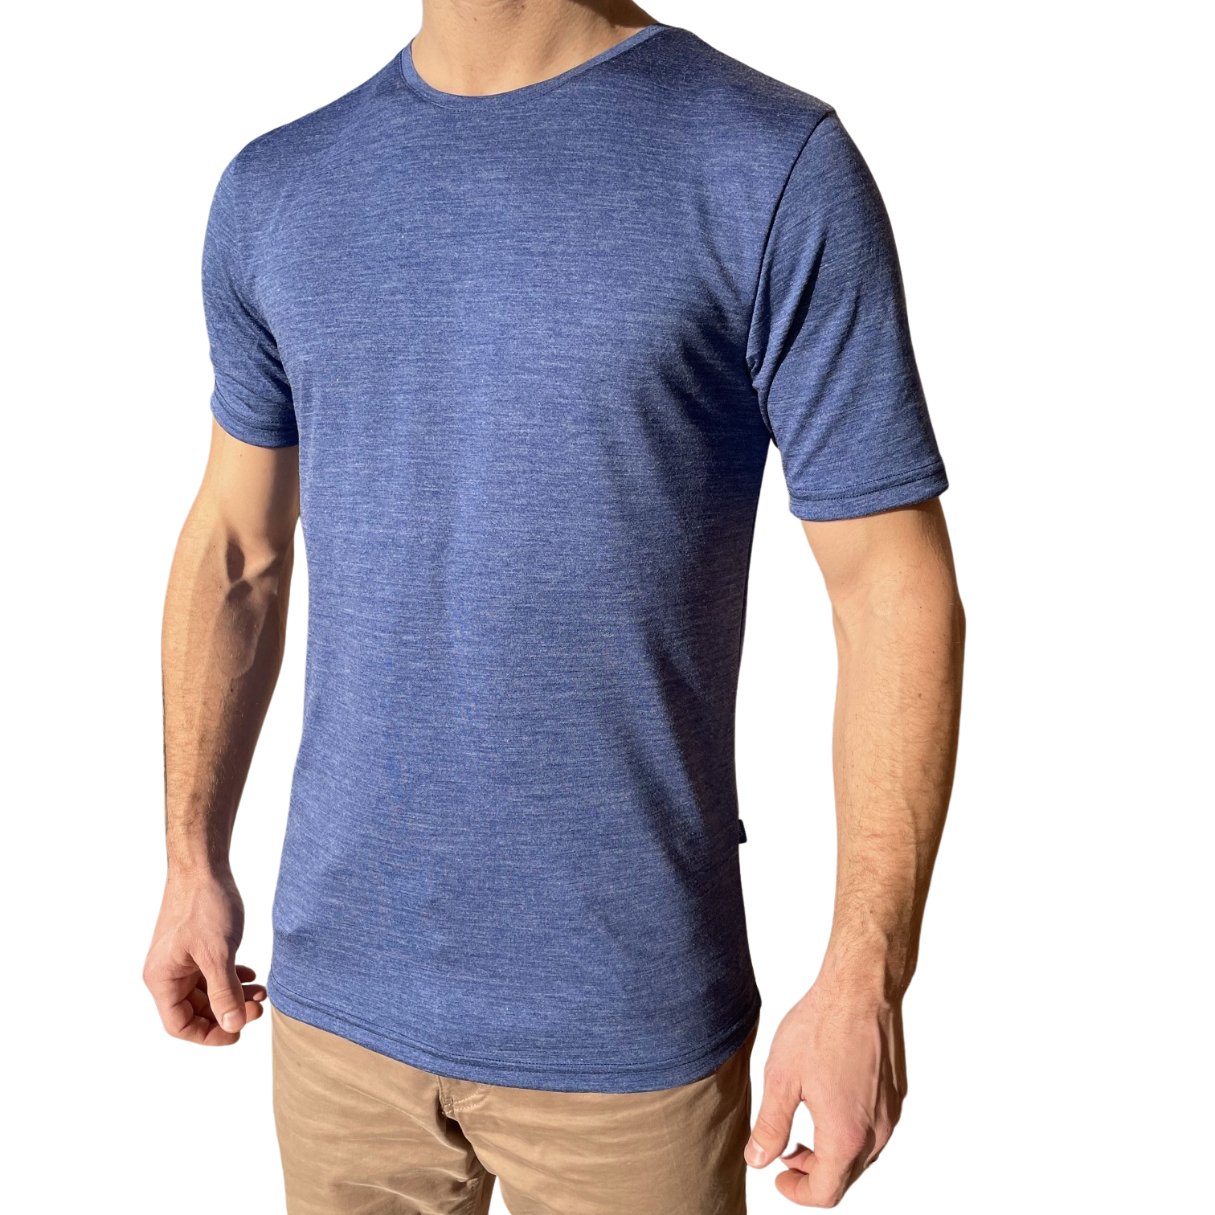 T-Shirt Herren royal blau, Merinowolle & Seide - Glückskind - T-Shirt - L